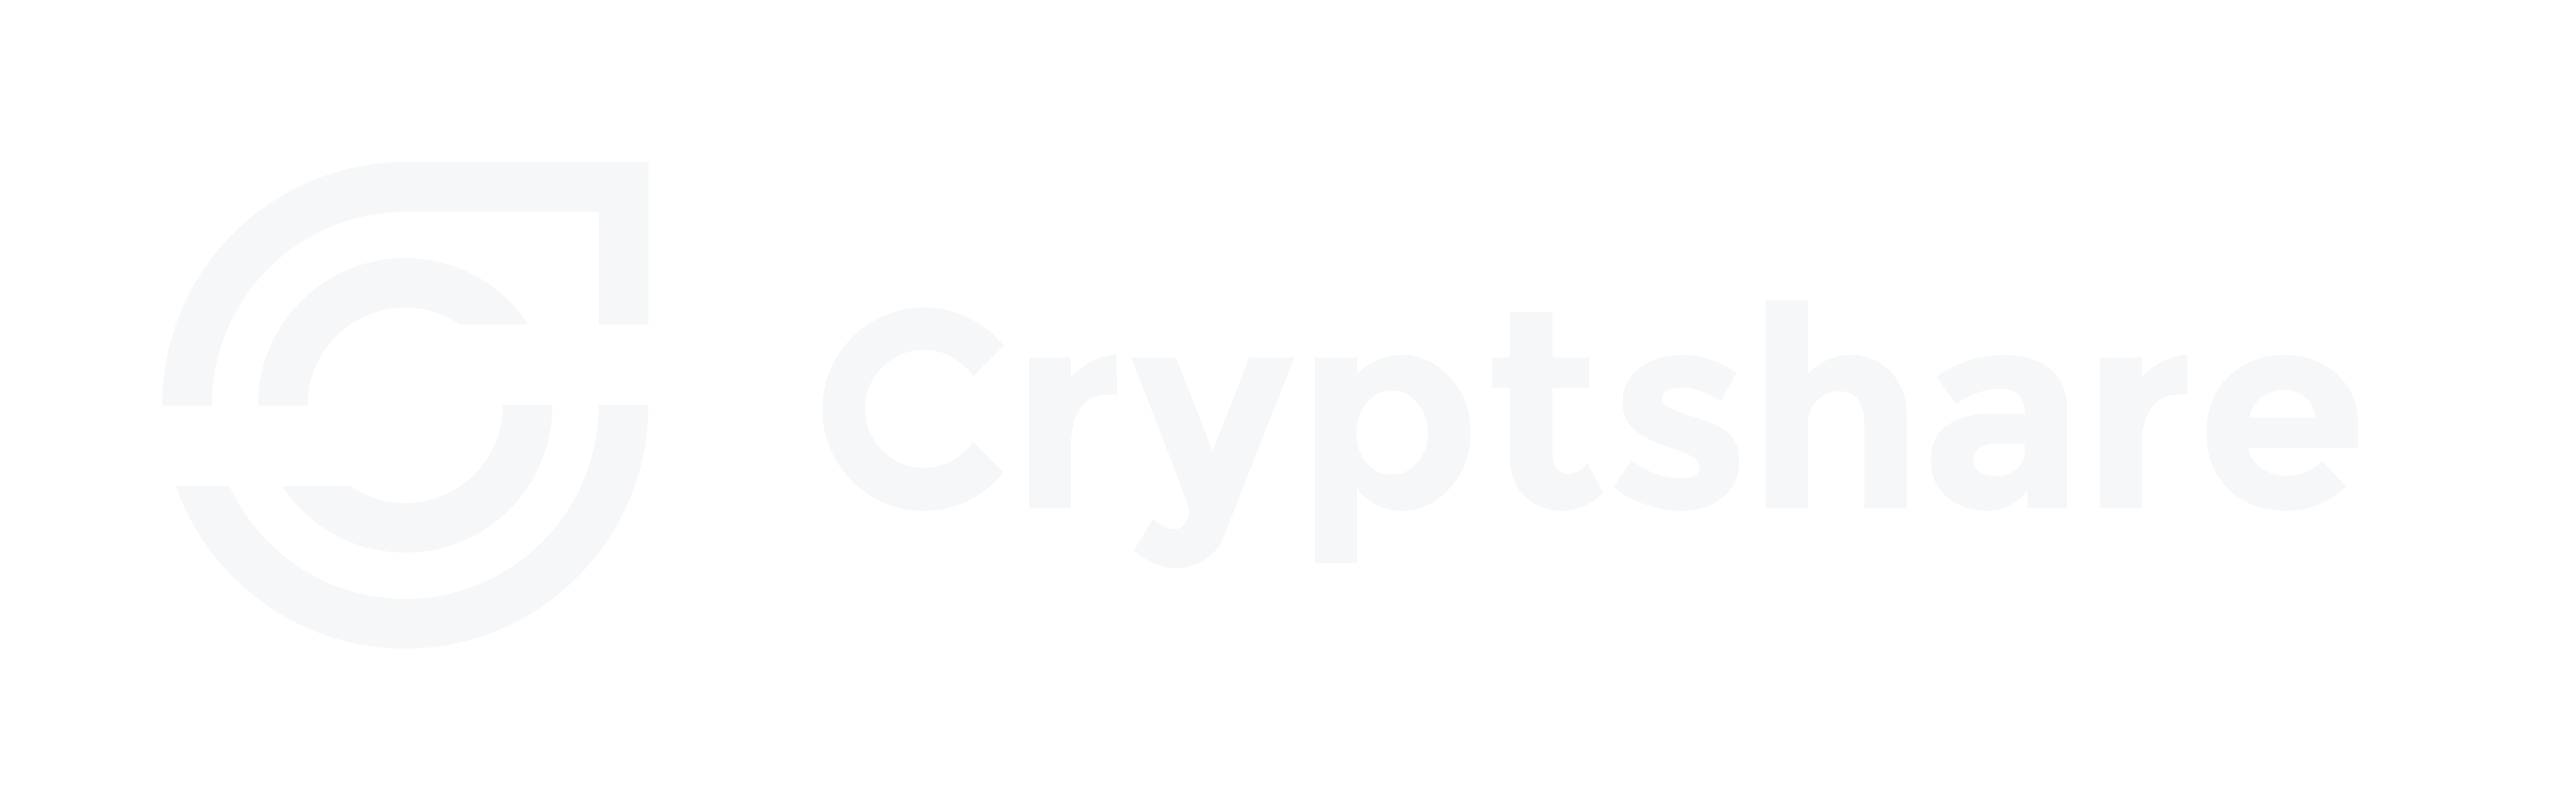 Cryptshare - almost white - horizontal